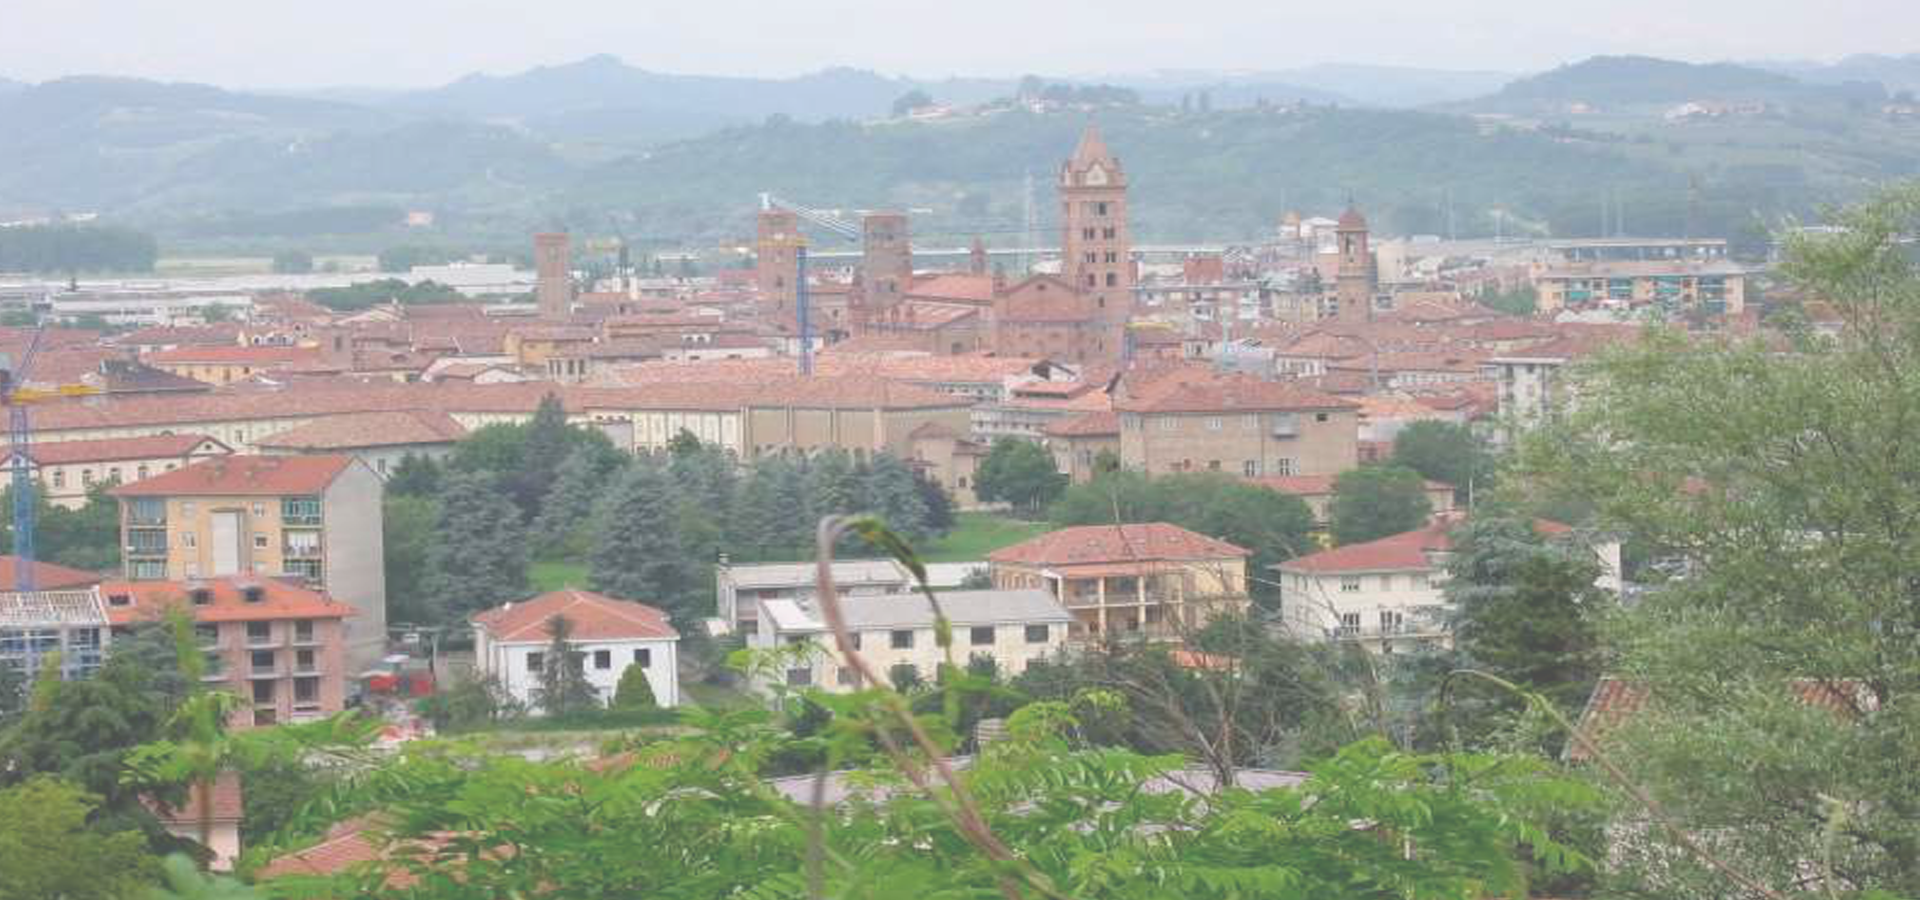 <b>Alba, Province of Cuneo, Piedmont, Italy</b>